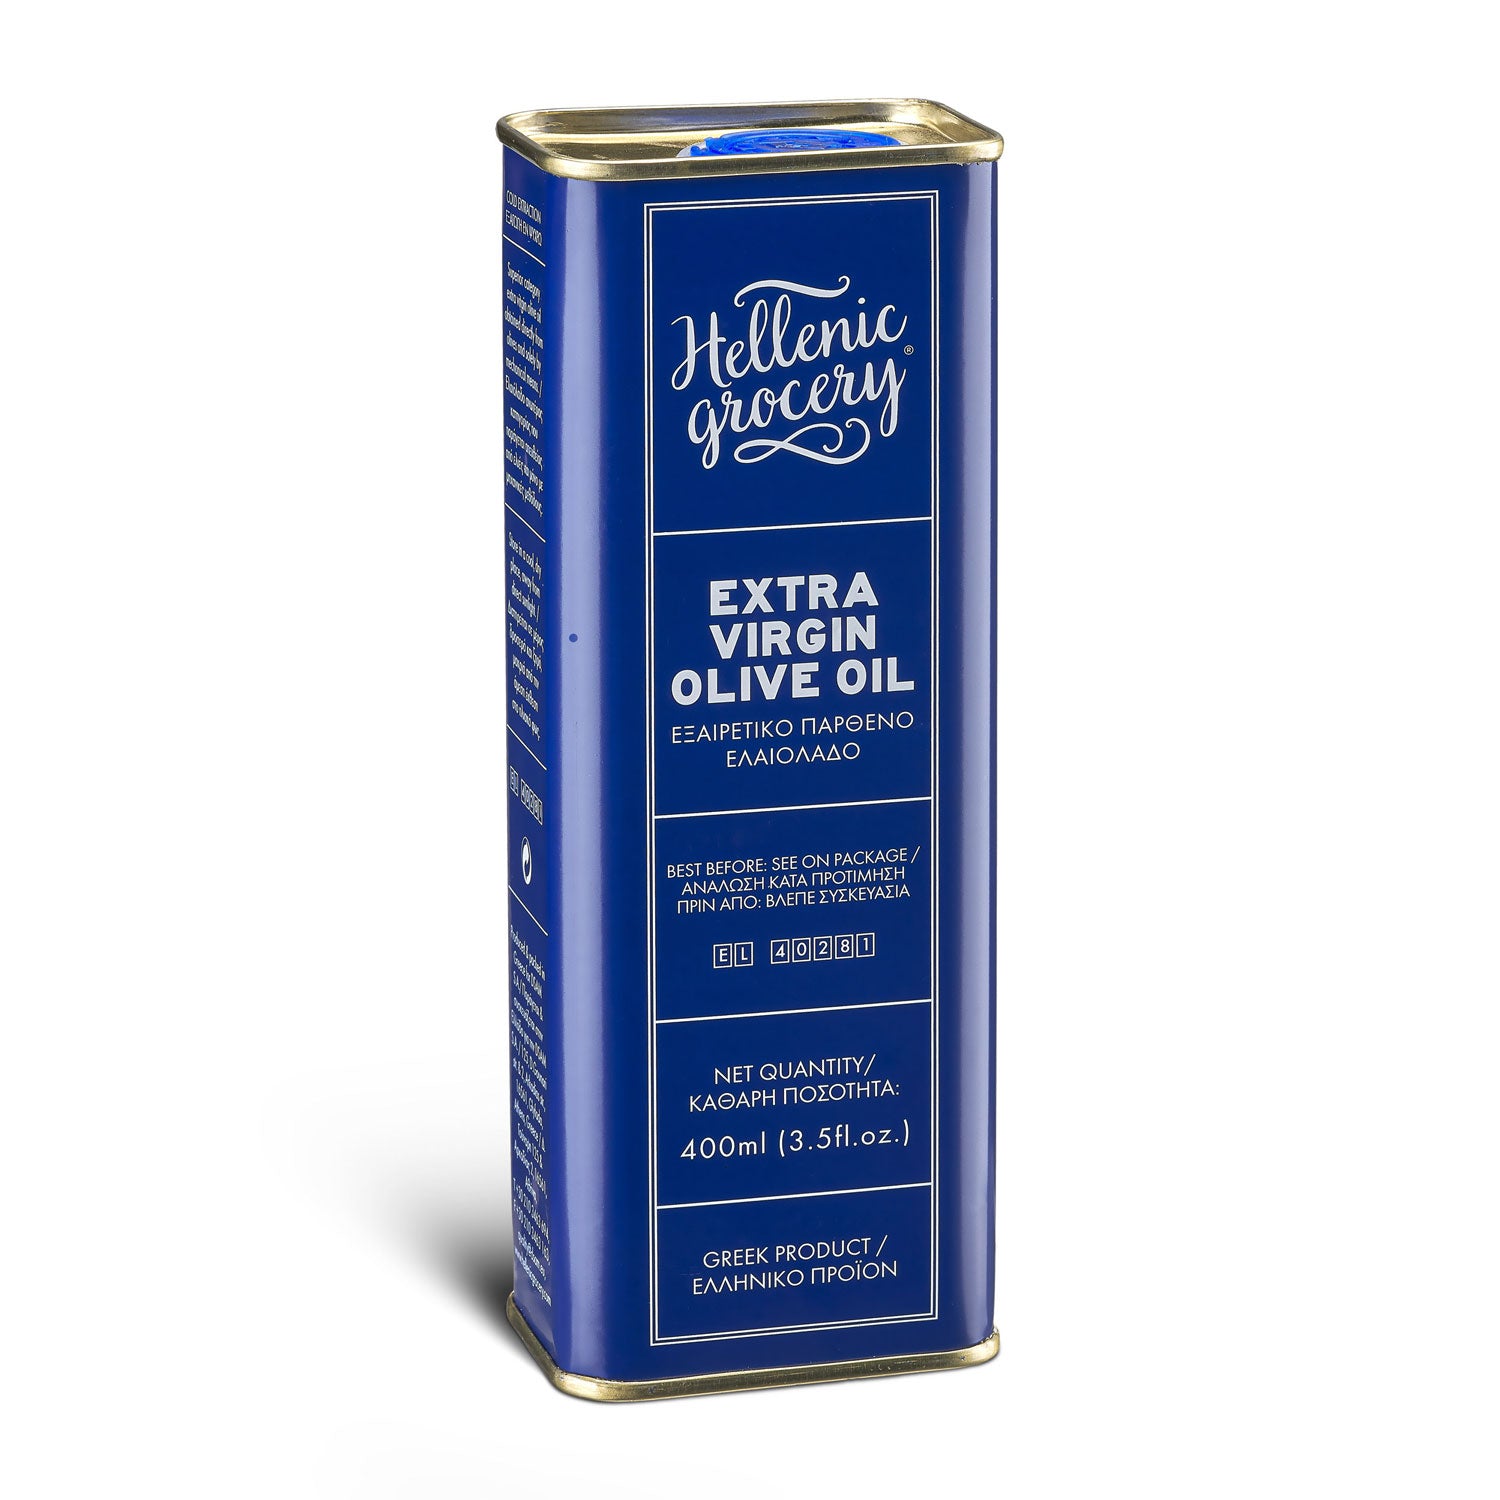 Extra natives Olivenöl BLUE - 400ml - Hellenic Grocery